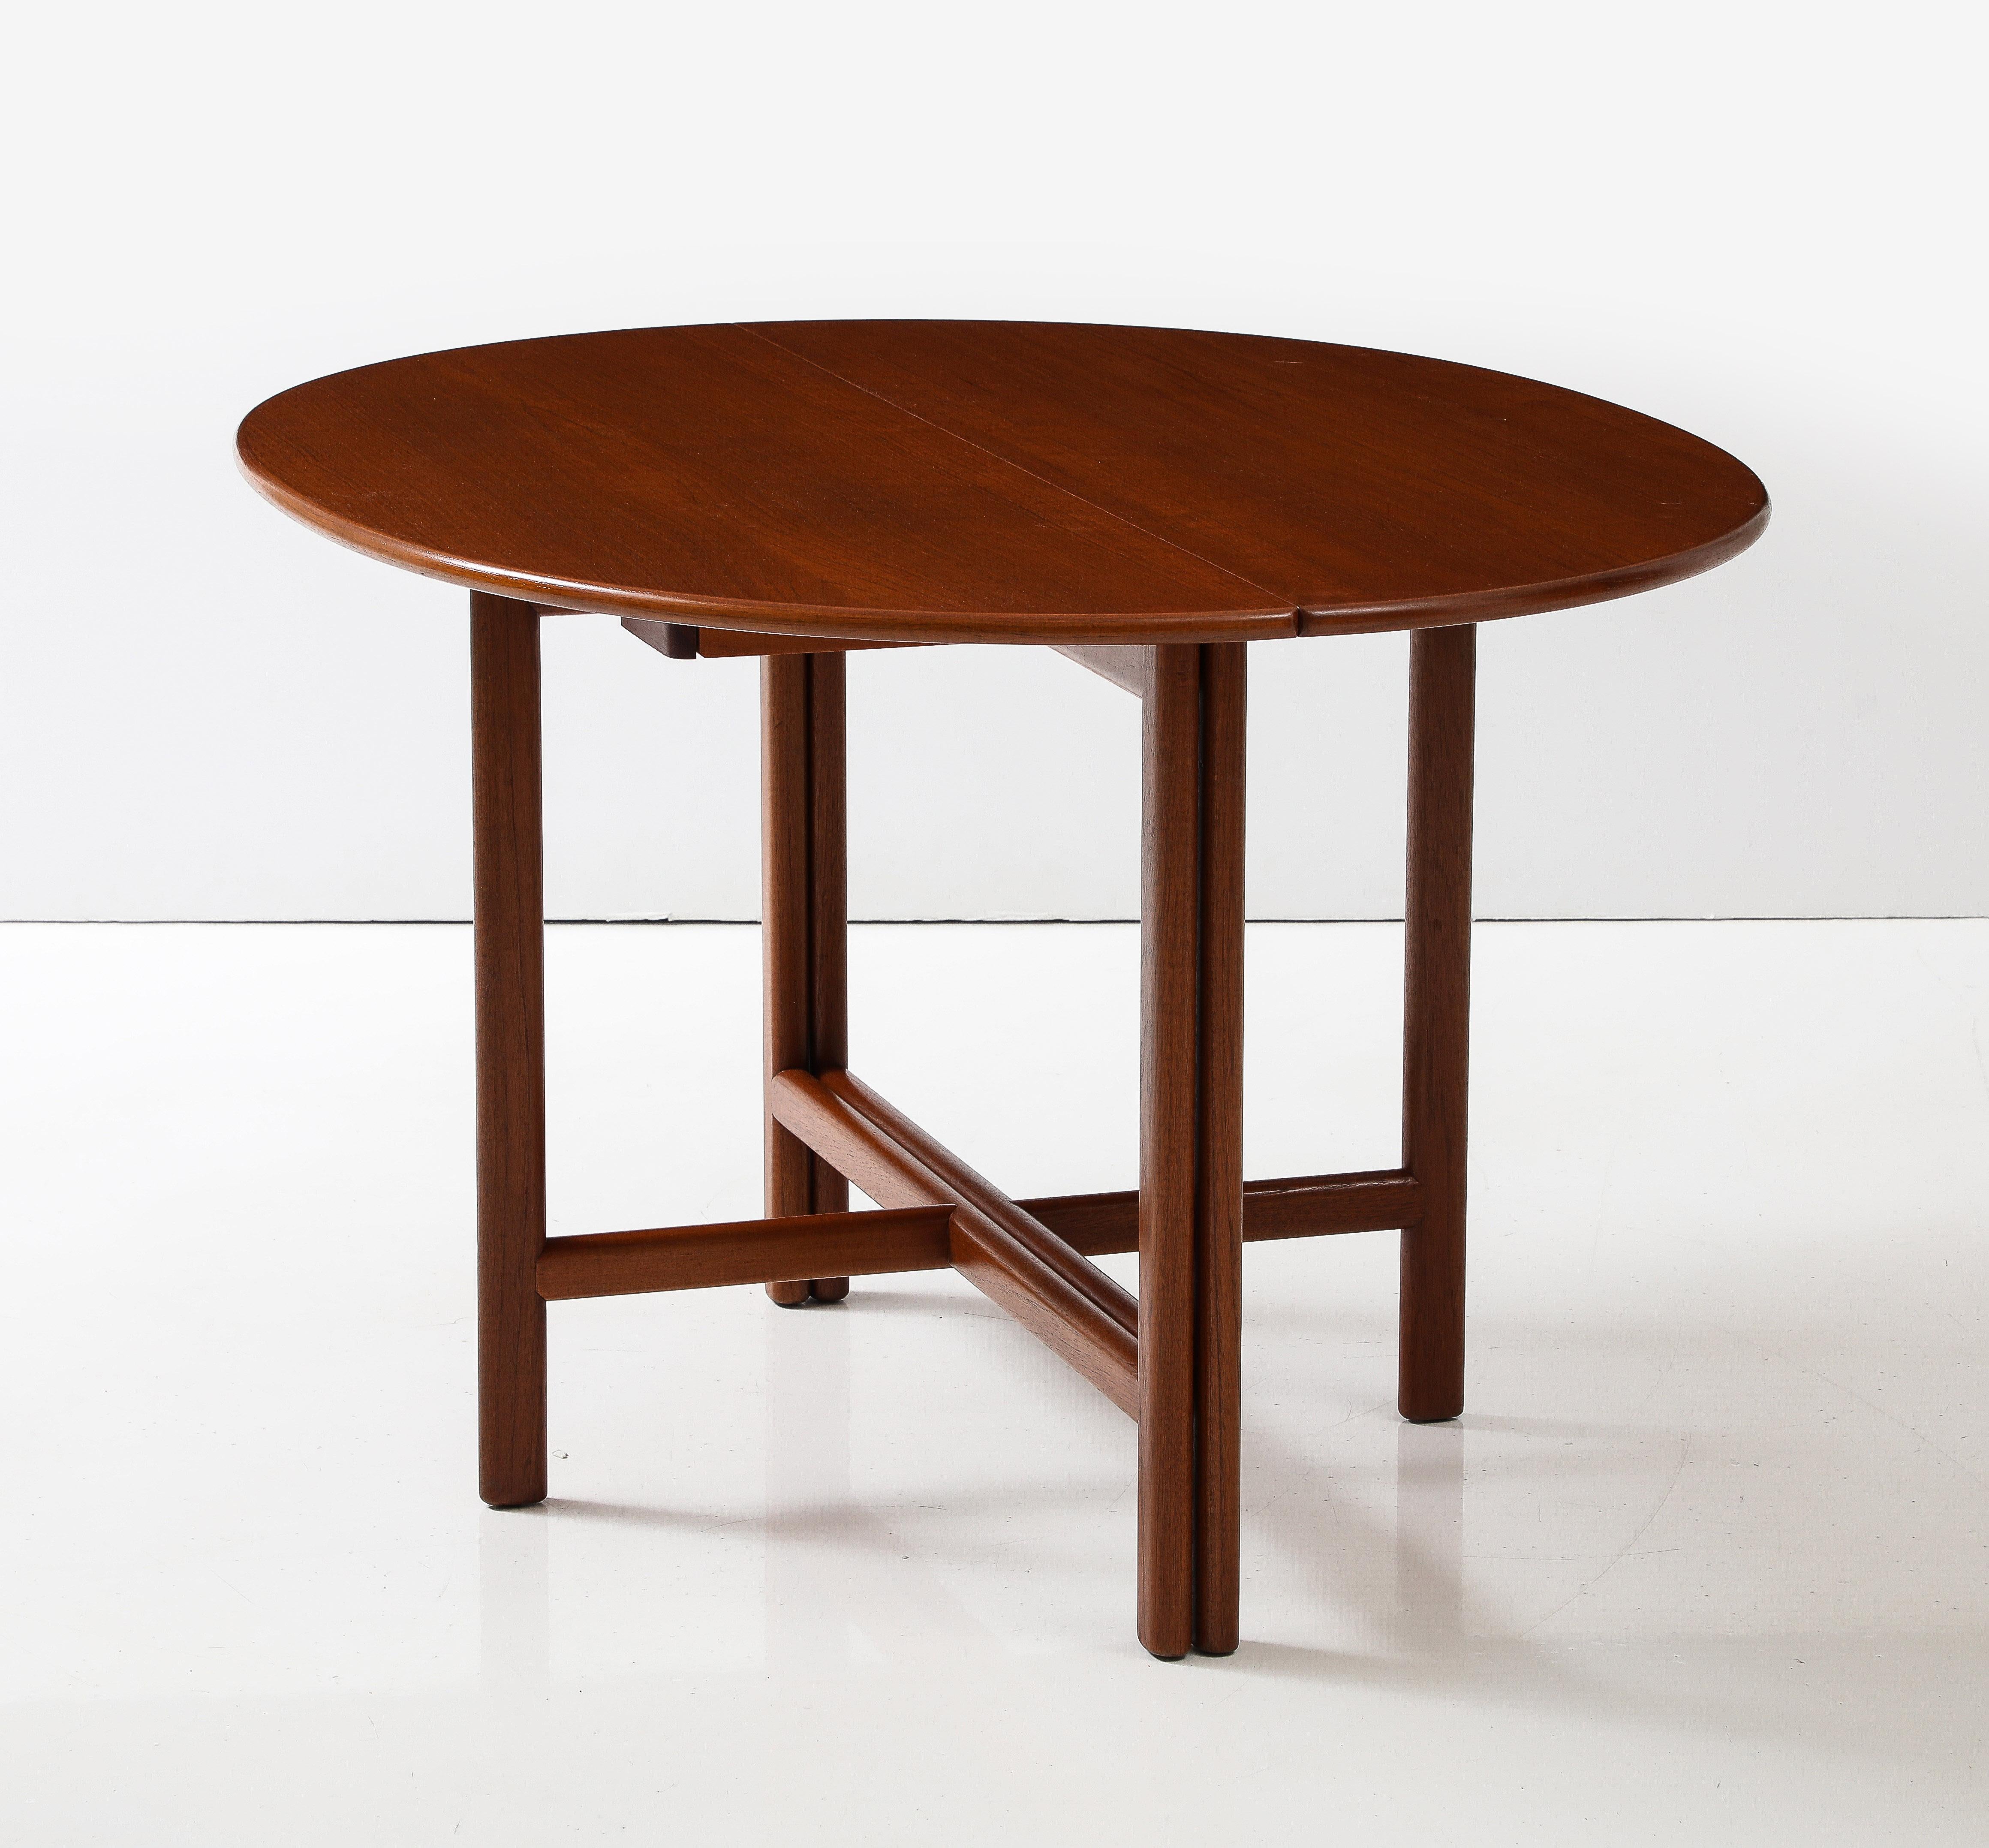 1960's Teak Dining Table Designed By Karl-Erik Ekselius For JOC With 3 Leaves 5